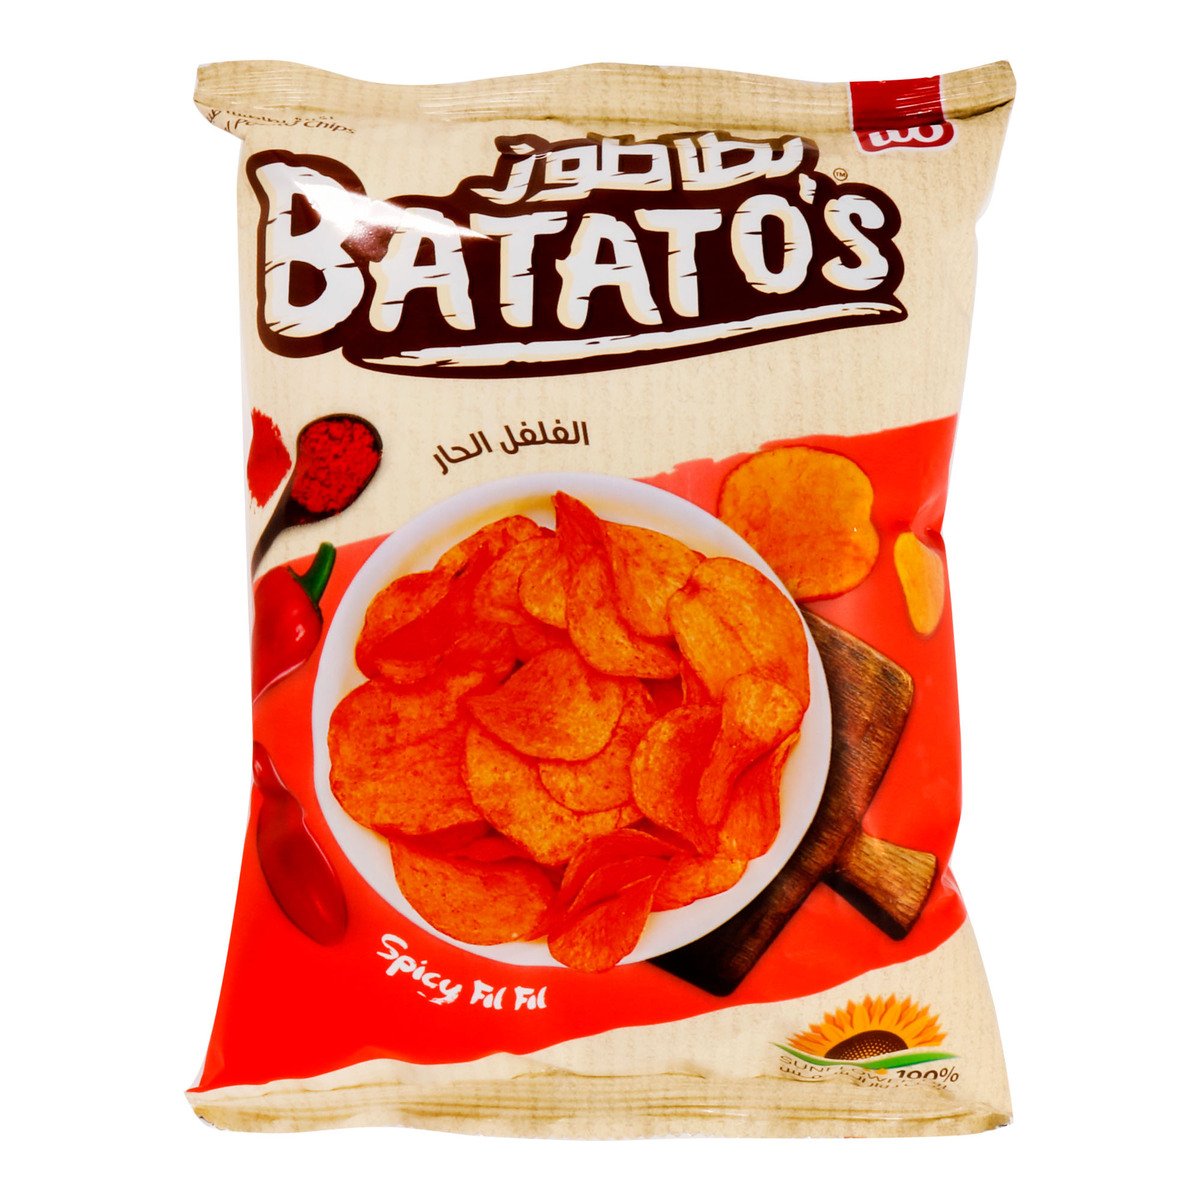 Batato's Spicy Fil Fil Chips 30g